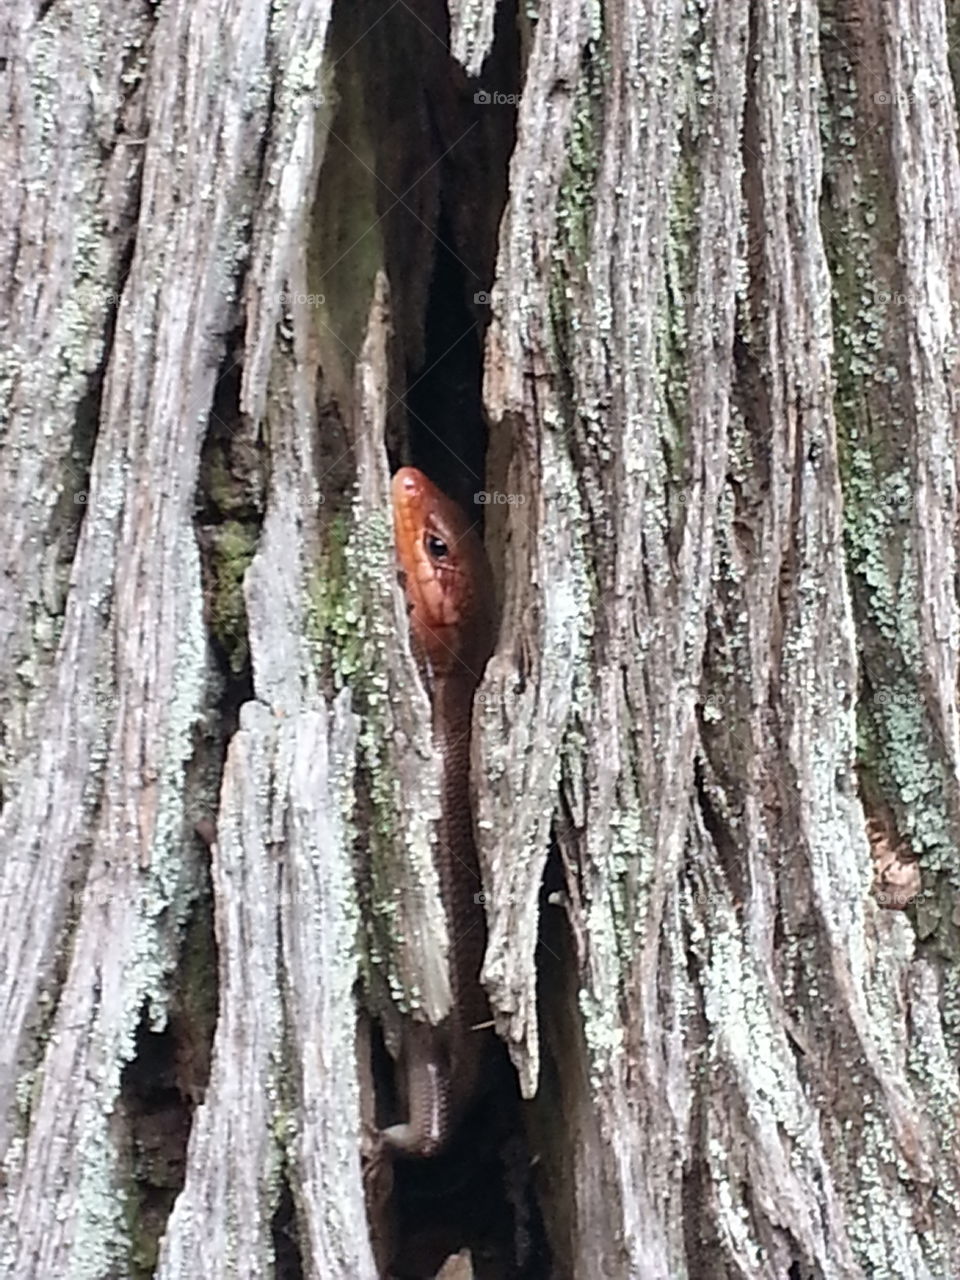 Skink hiding in a log